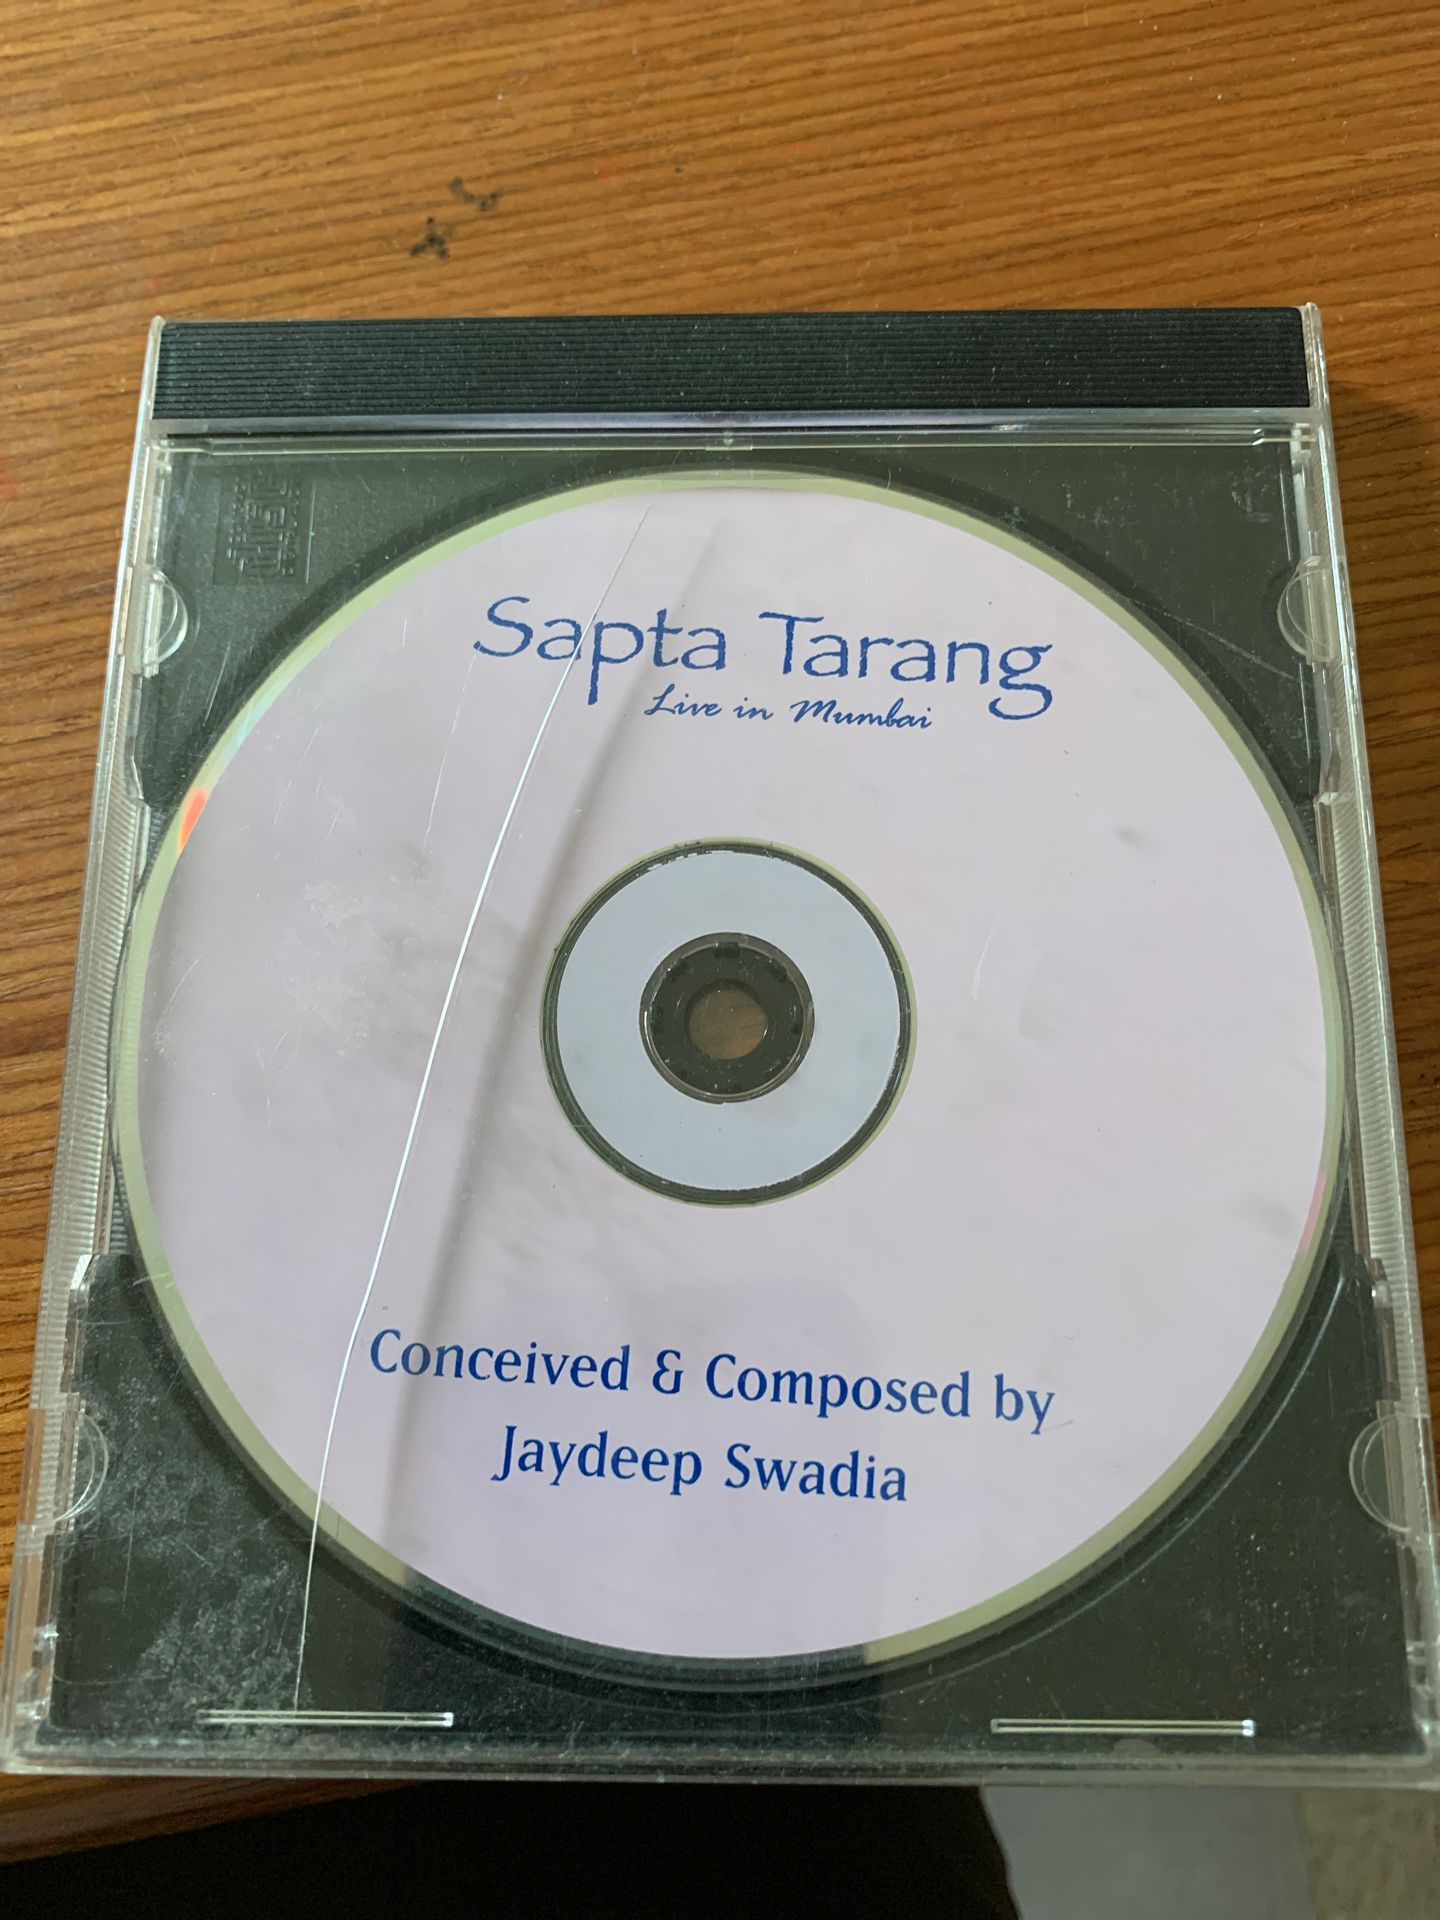 Free CD of Sapta Tarang songs by Jaydeep Swadia